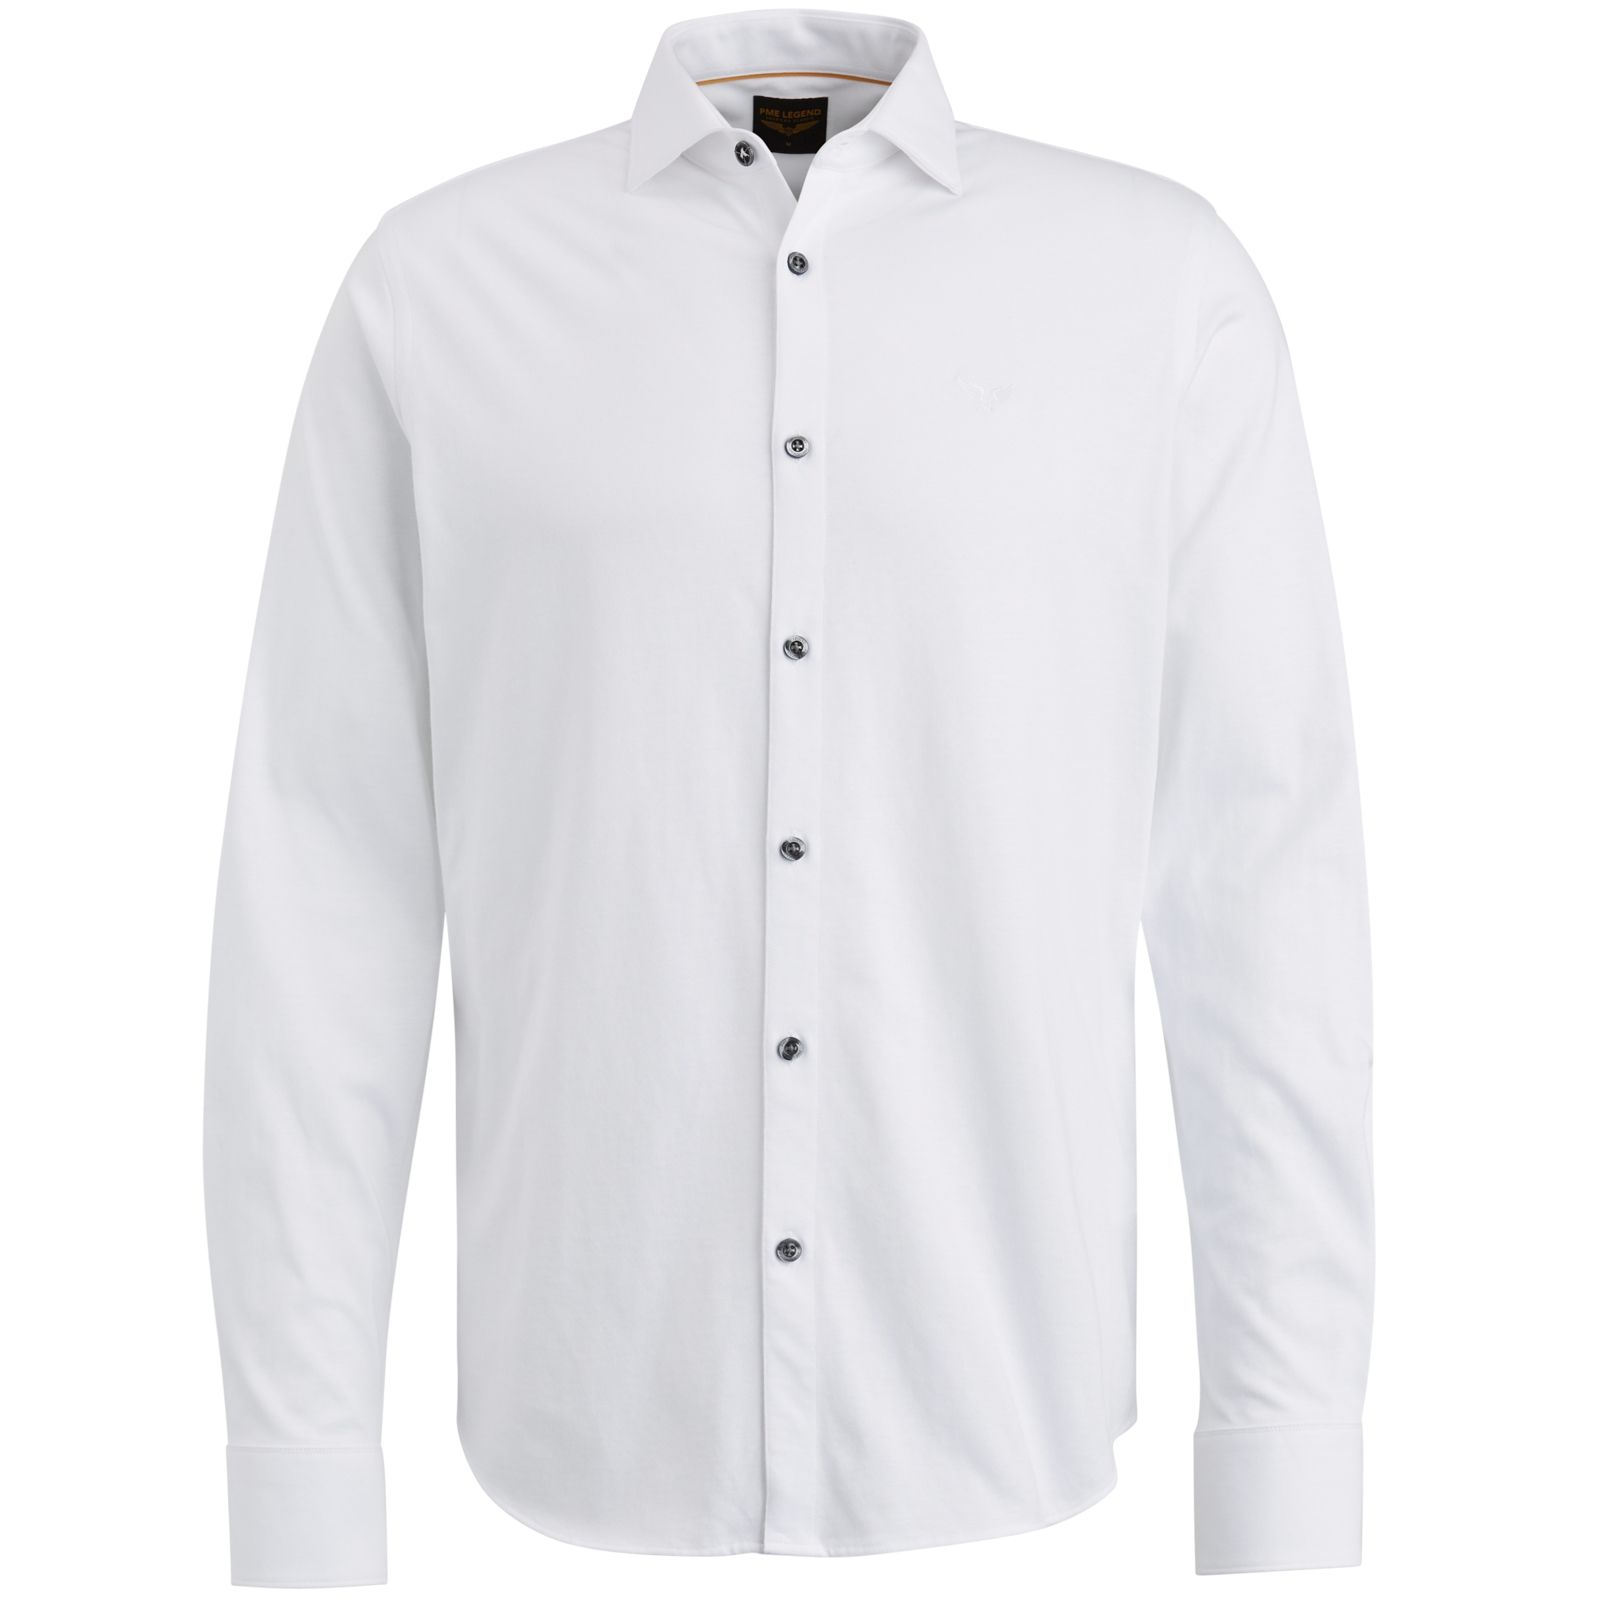 Pme Legend Long Sleeve Shirt Ctn Single Jerse Bright White 2900142616023